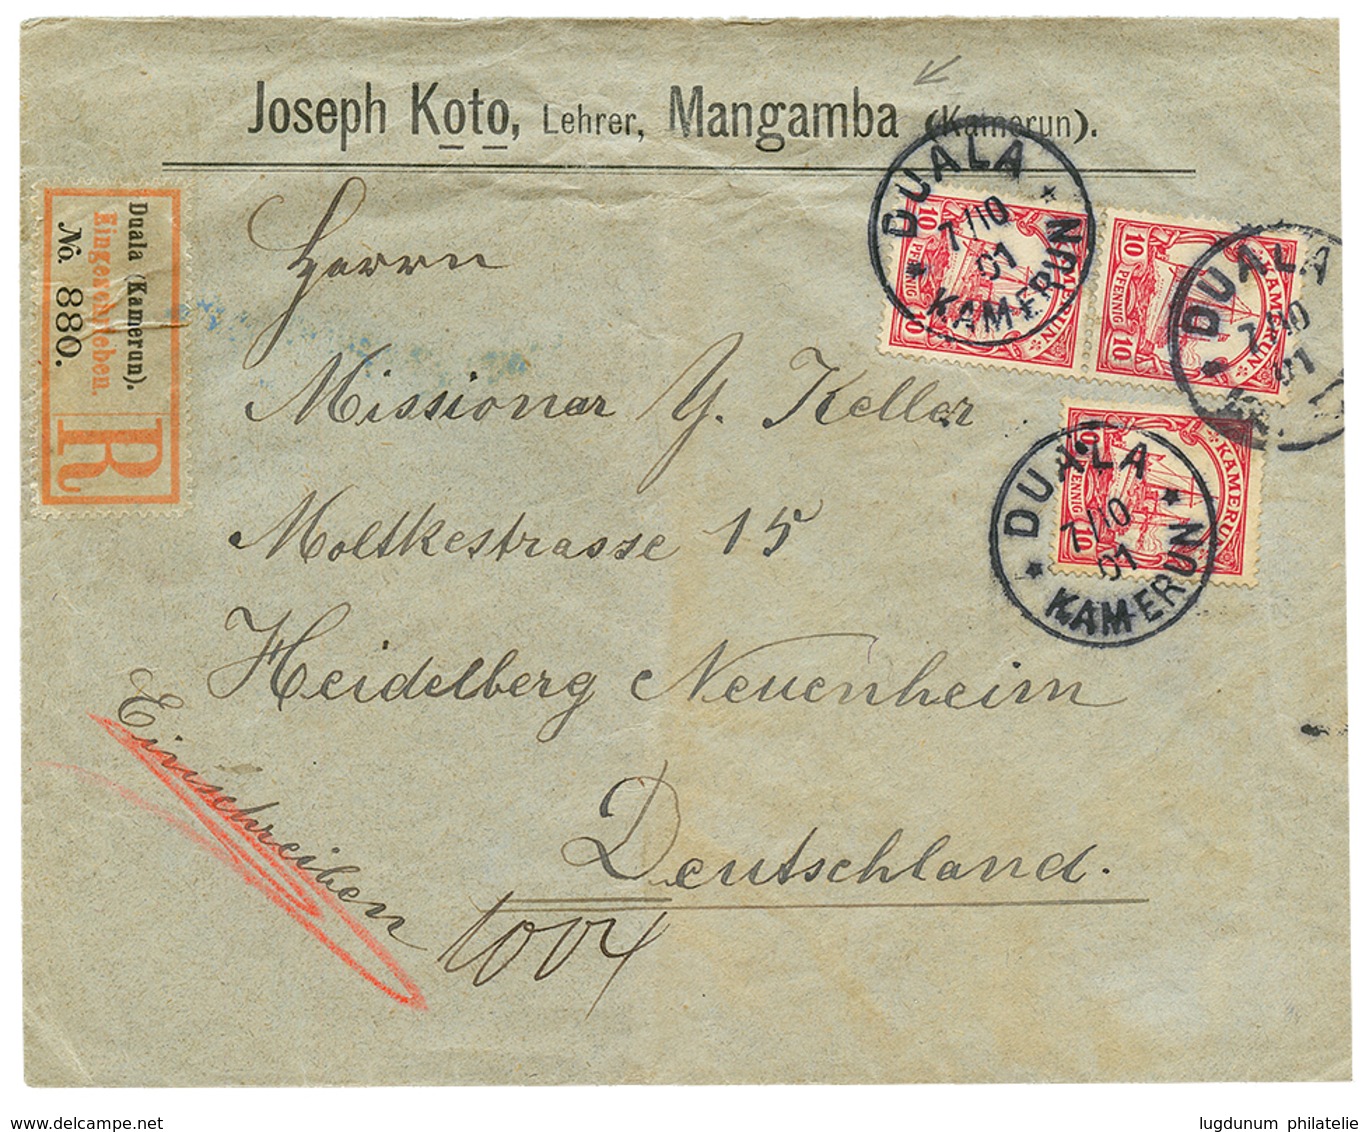 "MANGAMBA" : 1901 10pf(x3) Canc. DUALA KAMERUN On REGISTERED Commercial Envelope From MANGAMBA To GERMANY. Scarce. Vvf. - Kameroen